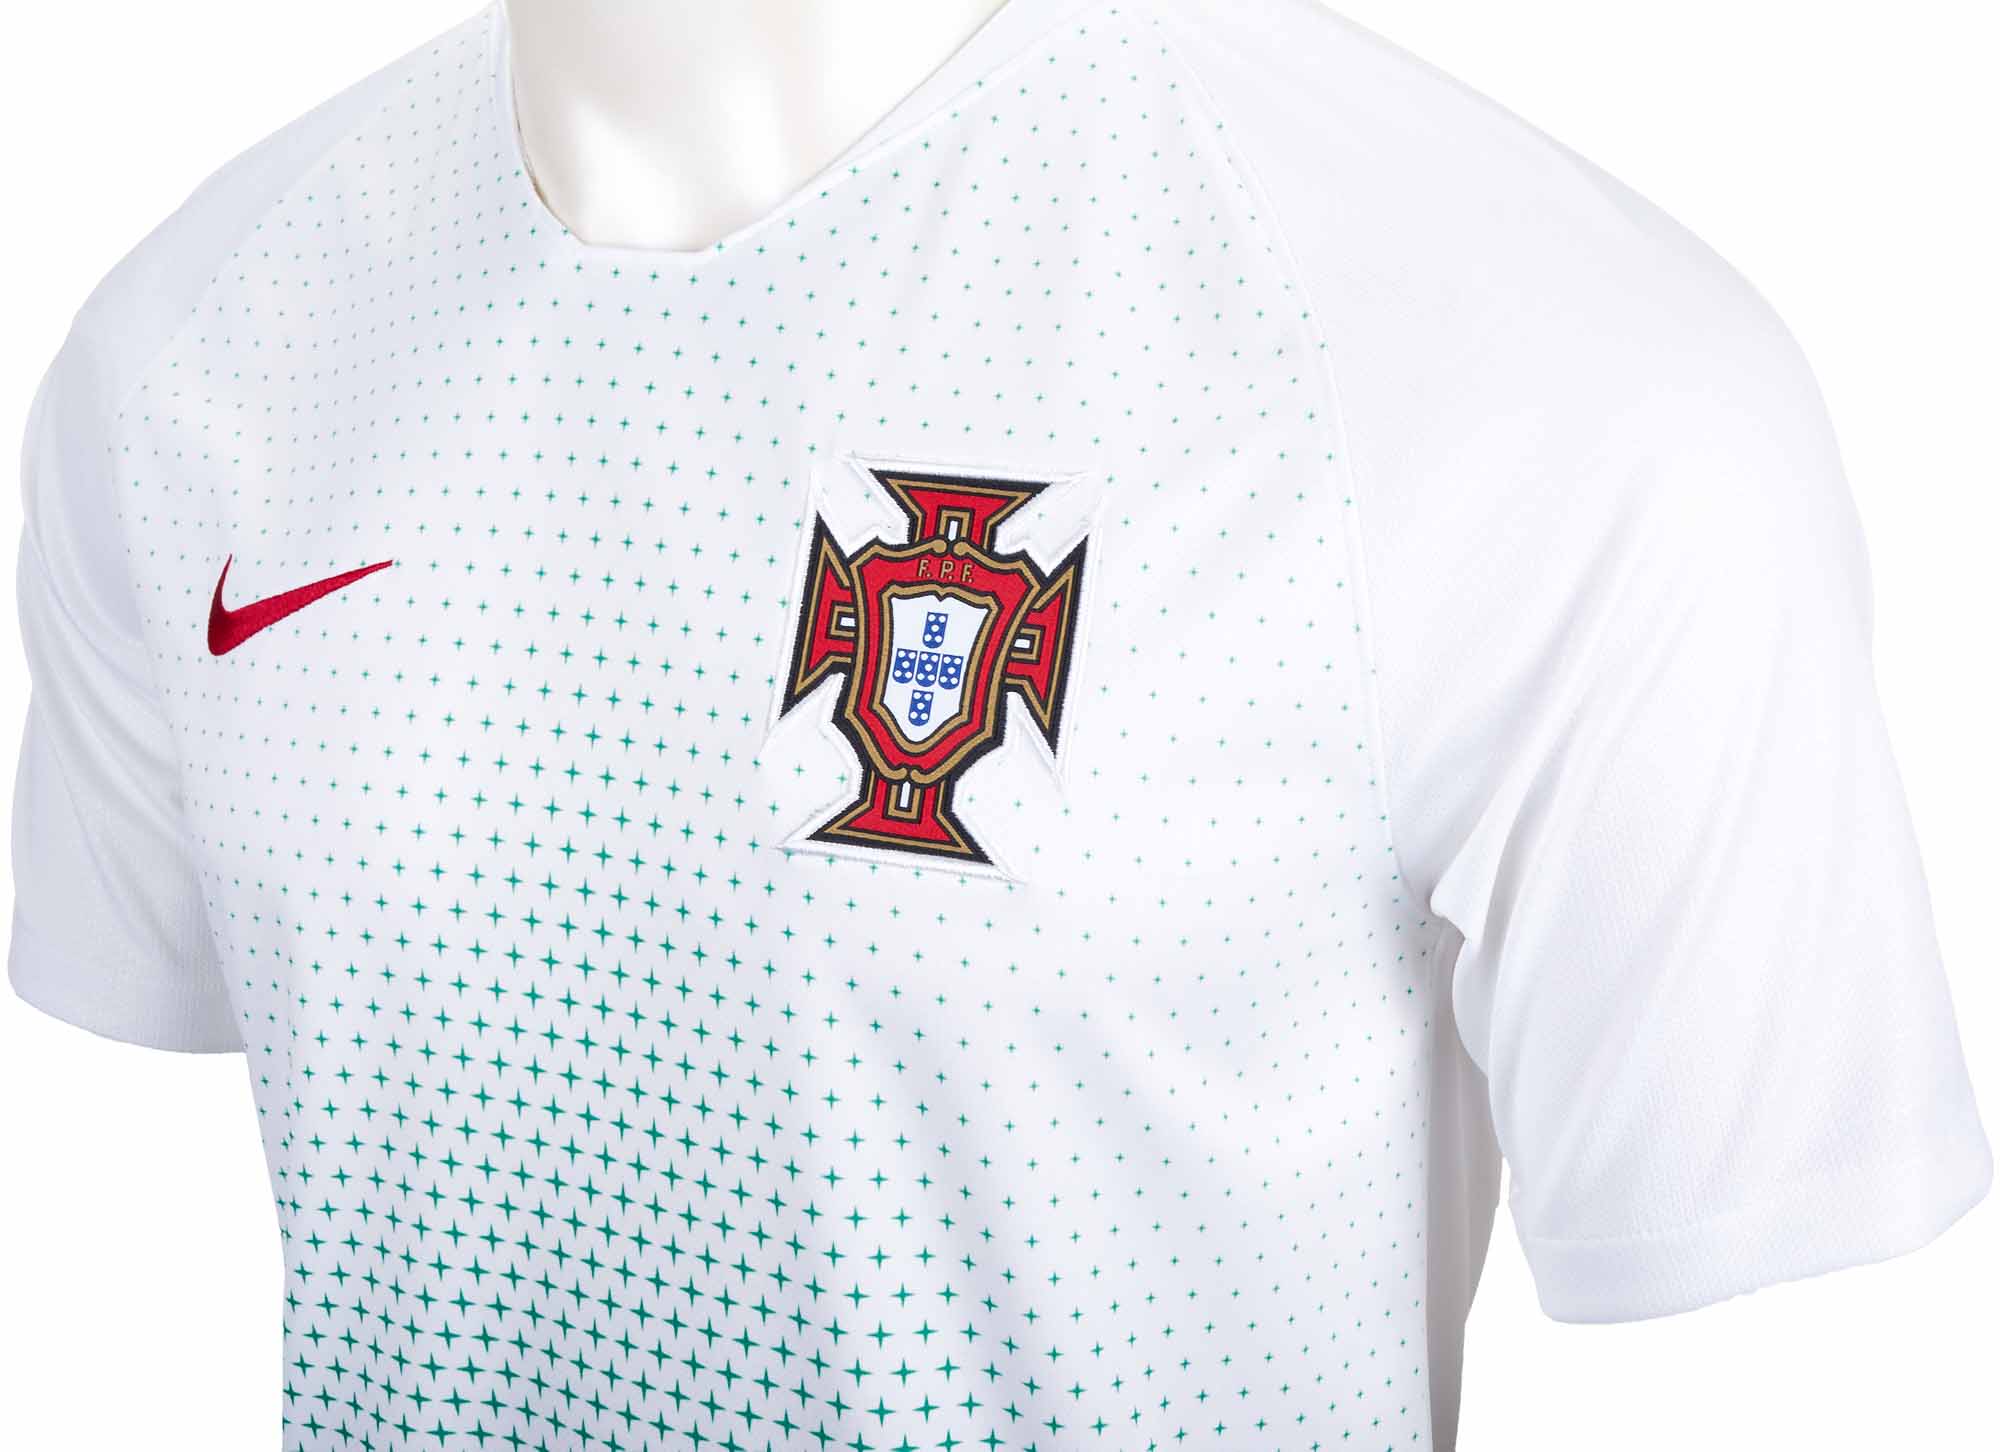 portugal new away kit